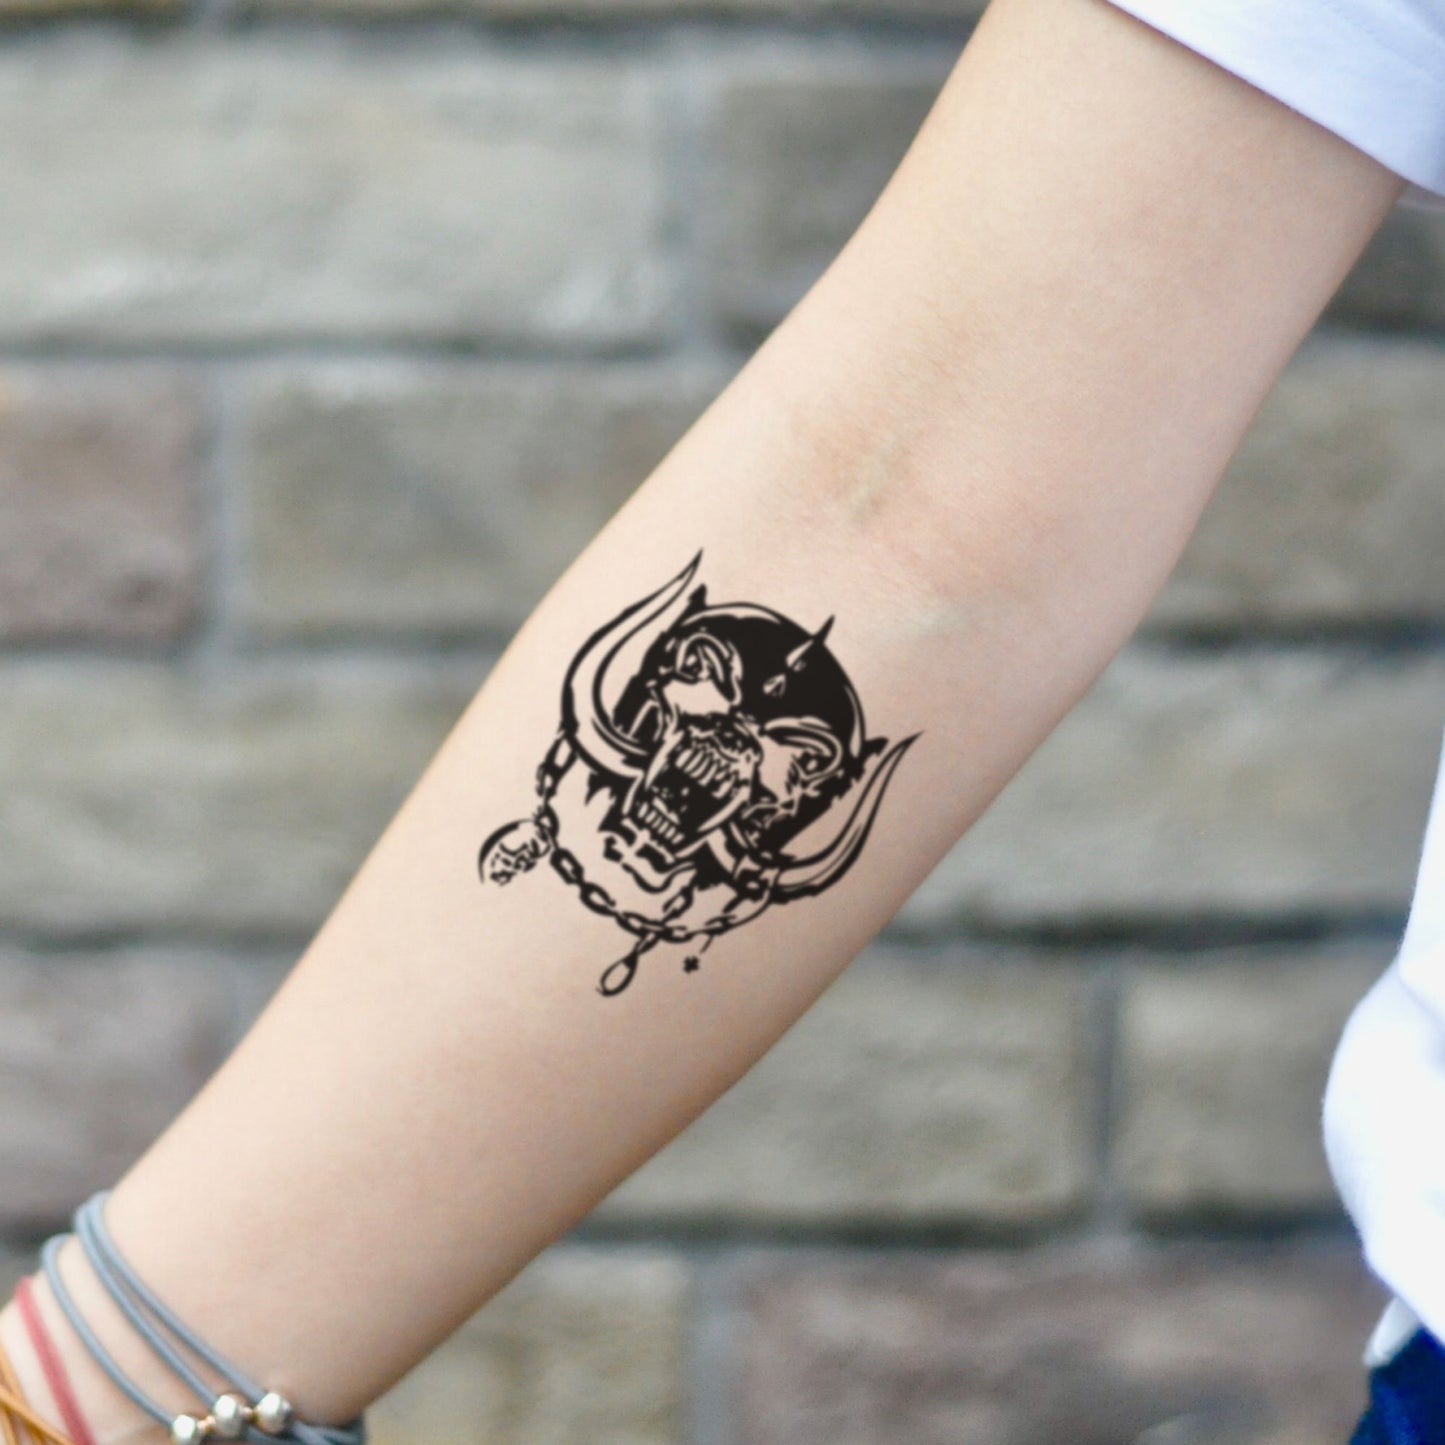 fake small motorhead illustrative temporary tattoo sticker design idea on inner arm